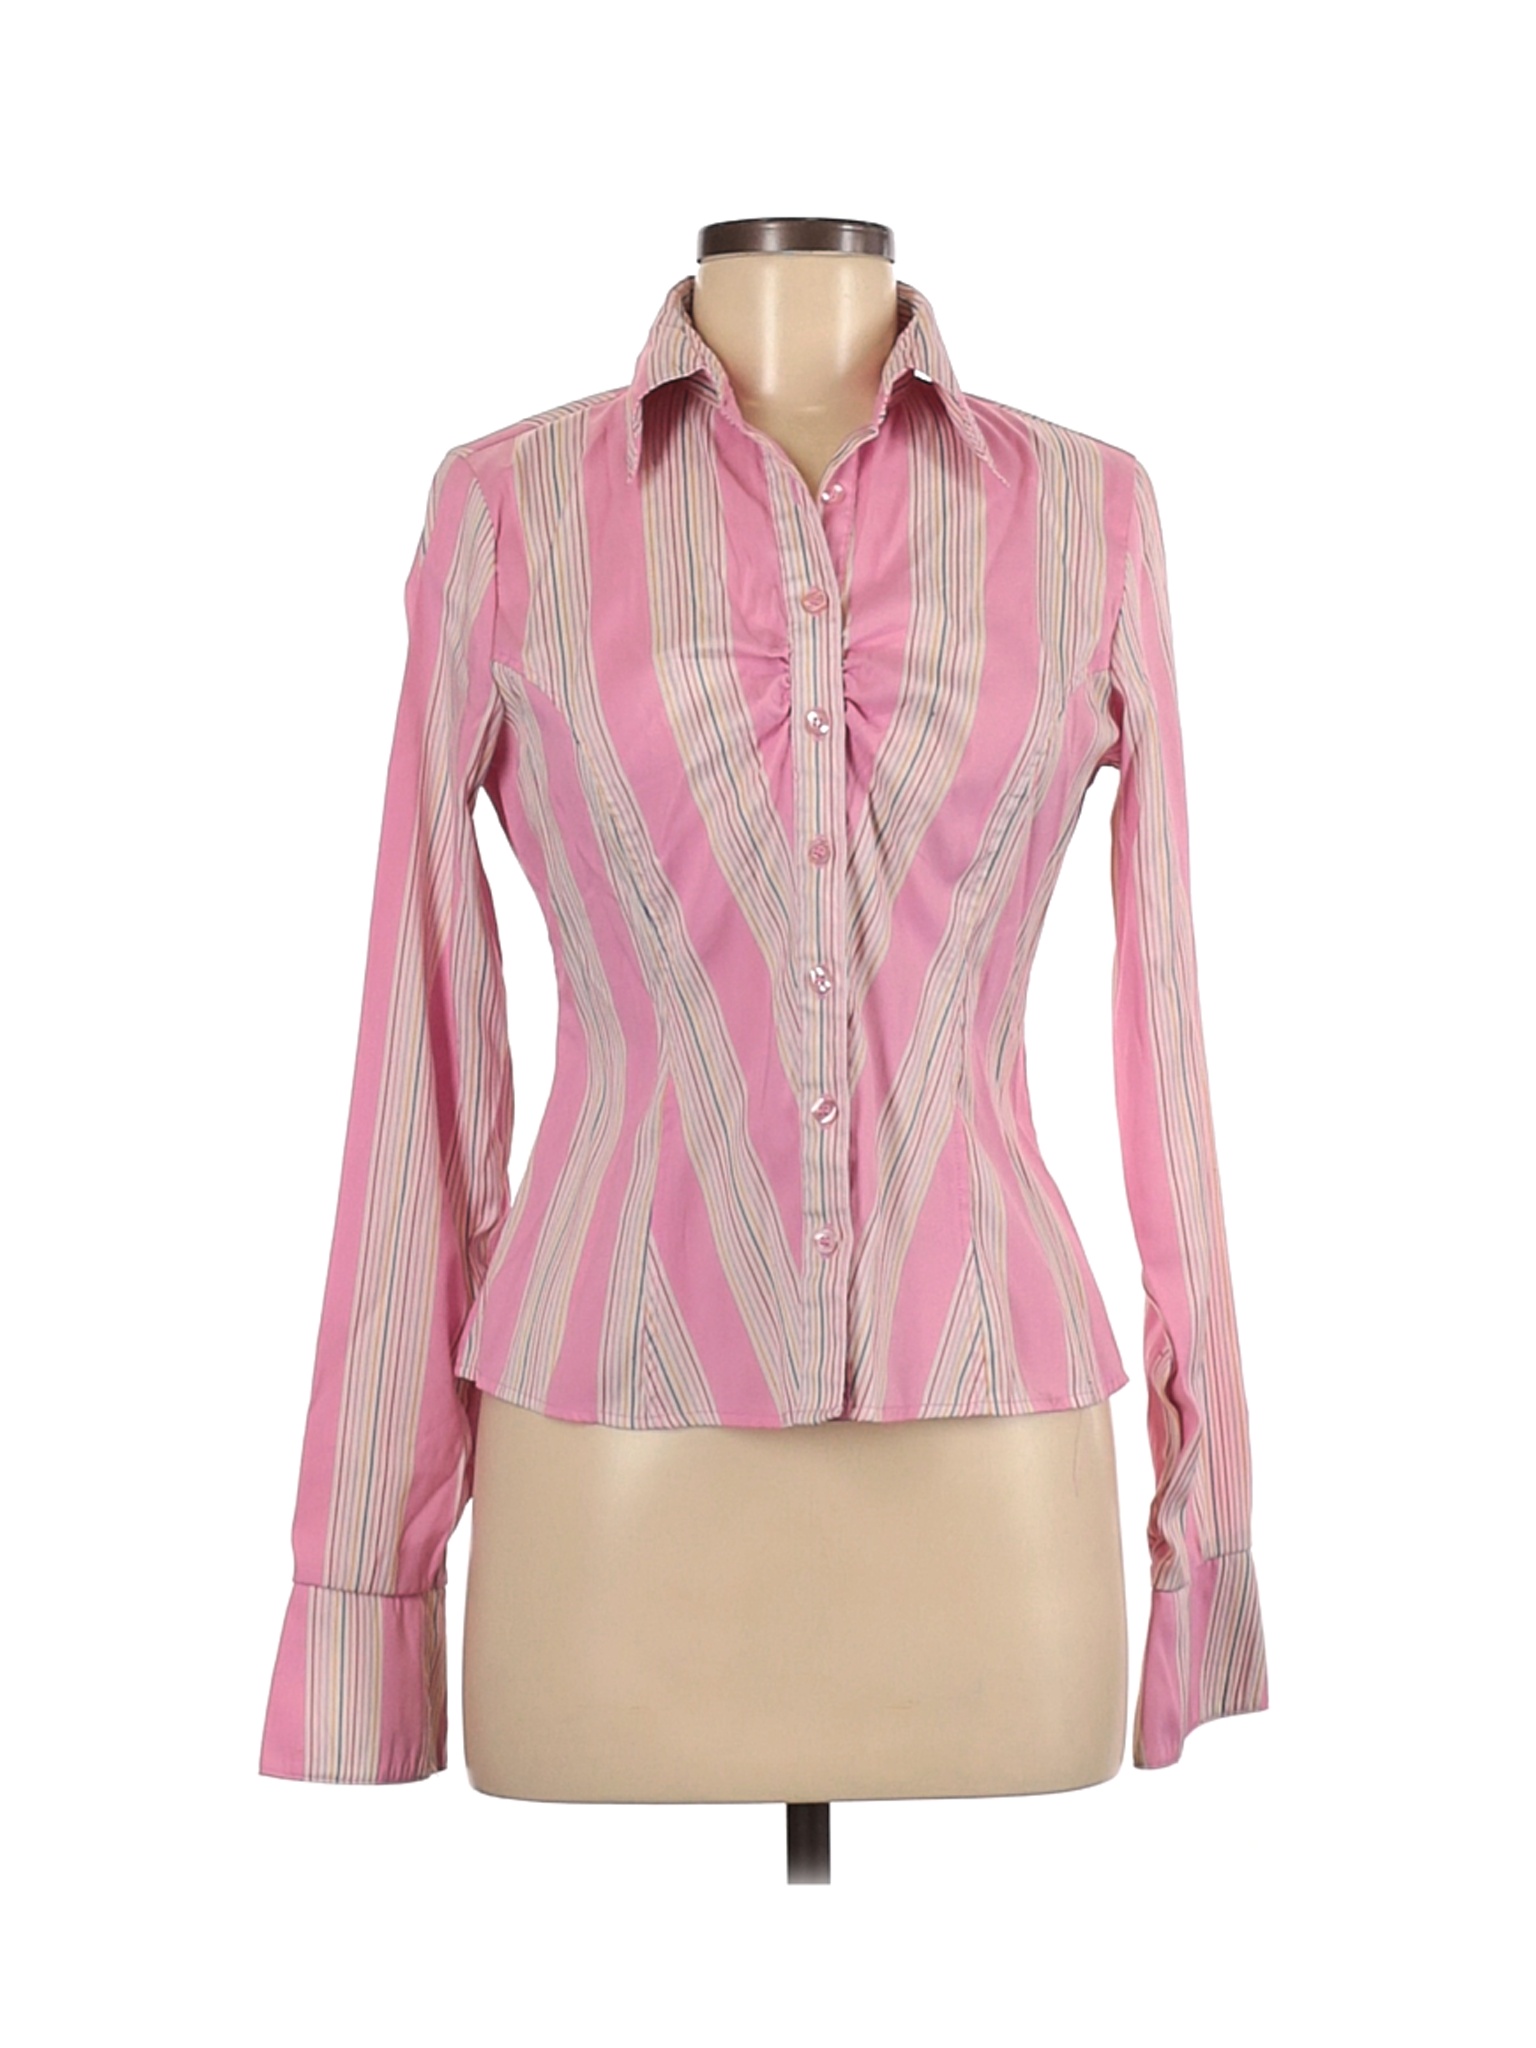 Cotton Express Women Pink Long Sleeve Blouse M | eBay